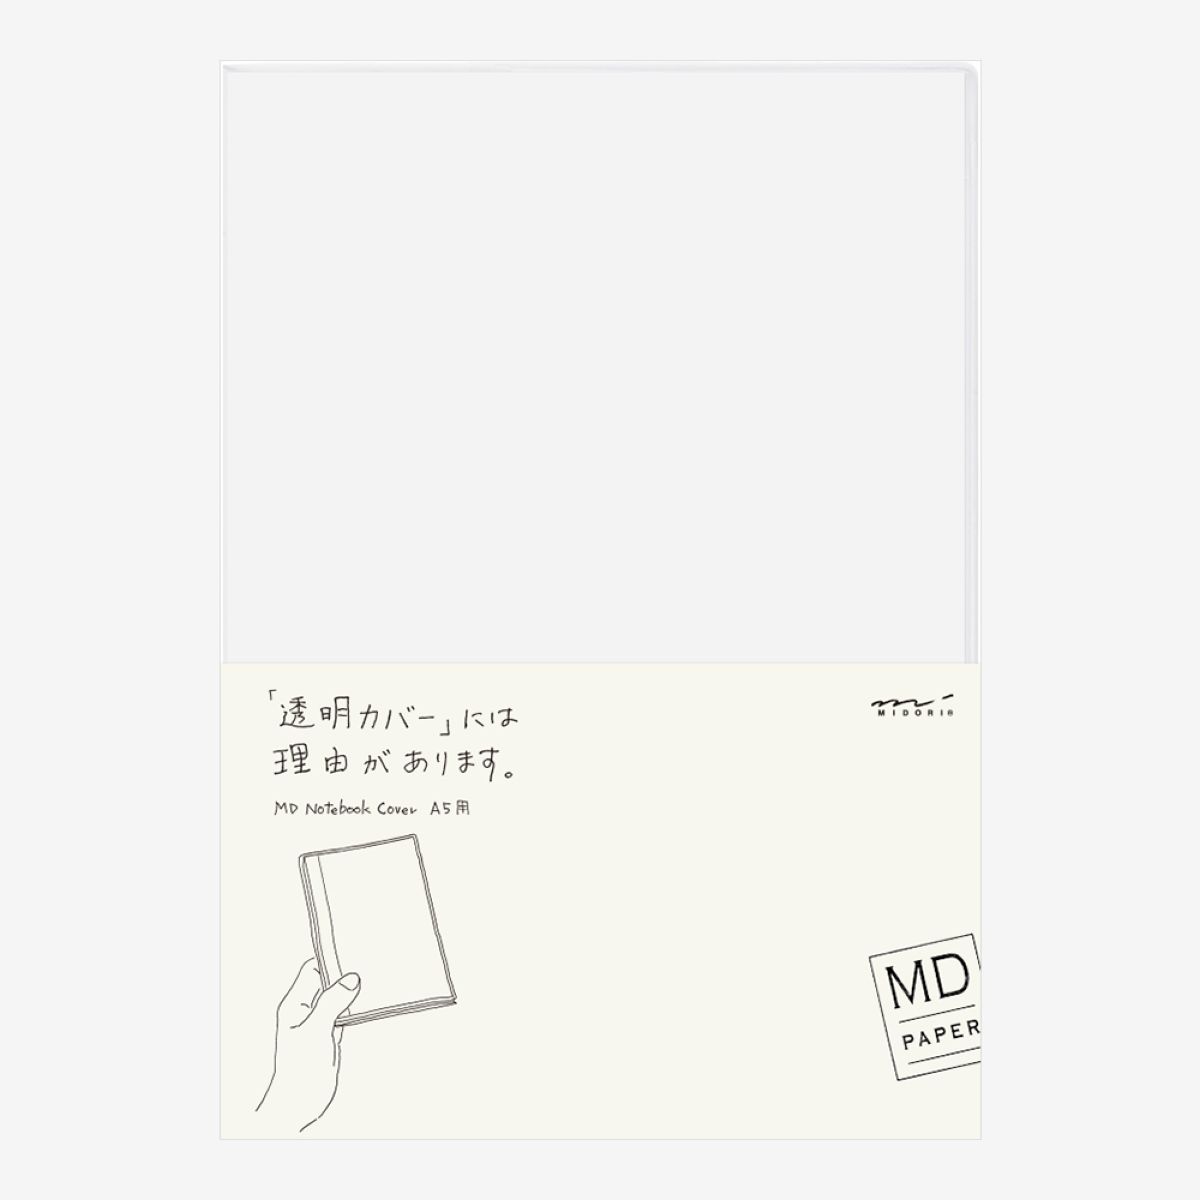 Midori - Kunststoff Cover A5